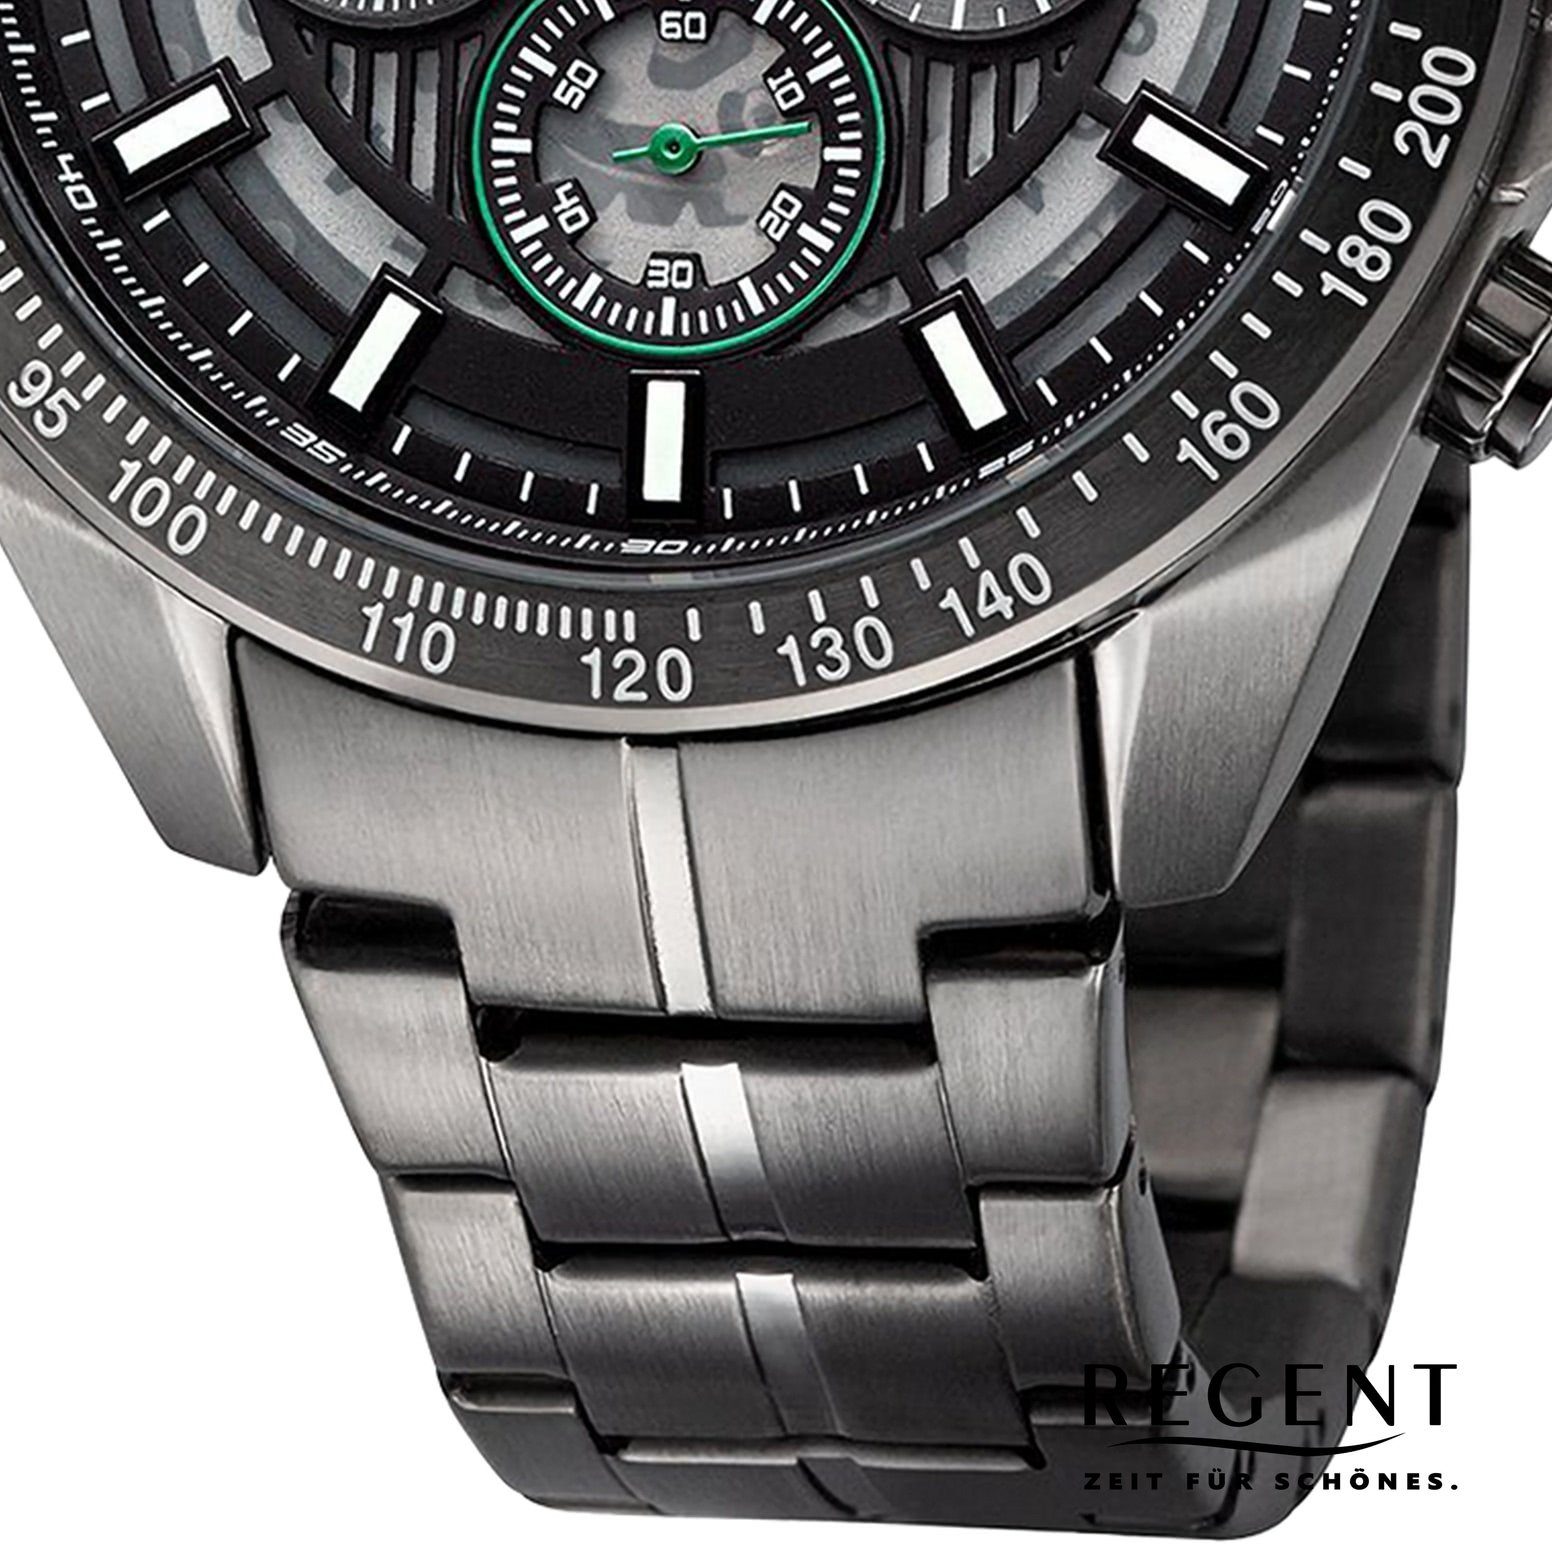 Regent grün Quarzuhr groß Herren extra (ca. rund, Regent Armbanduhr Metallarmband Armbanduhr Herren 46mm), Analog,